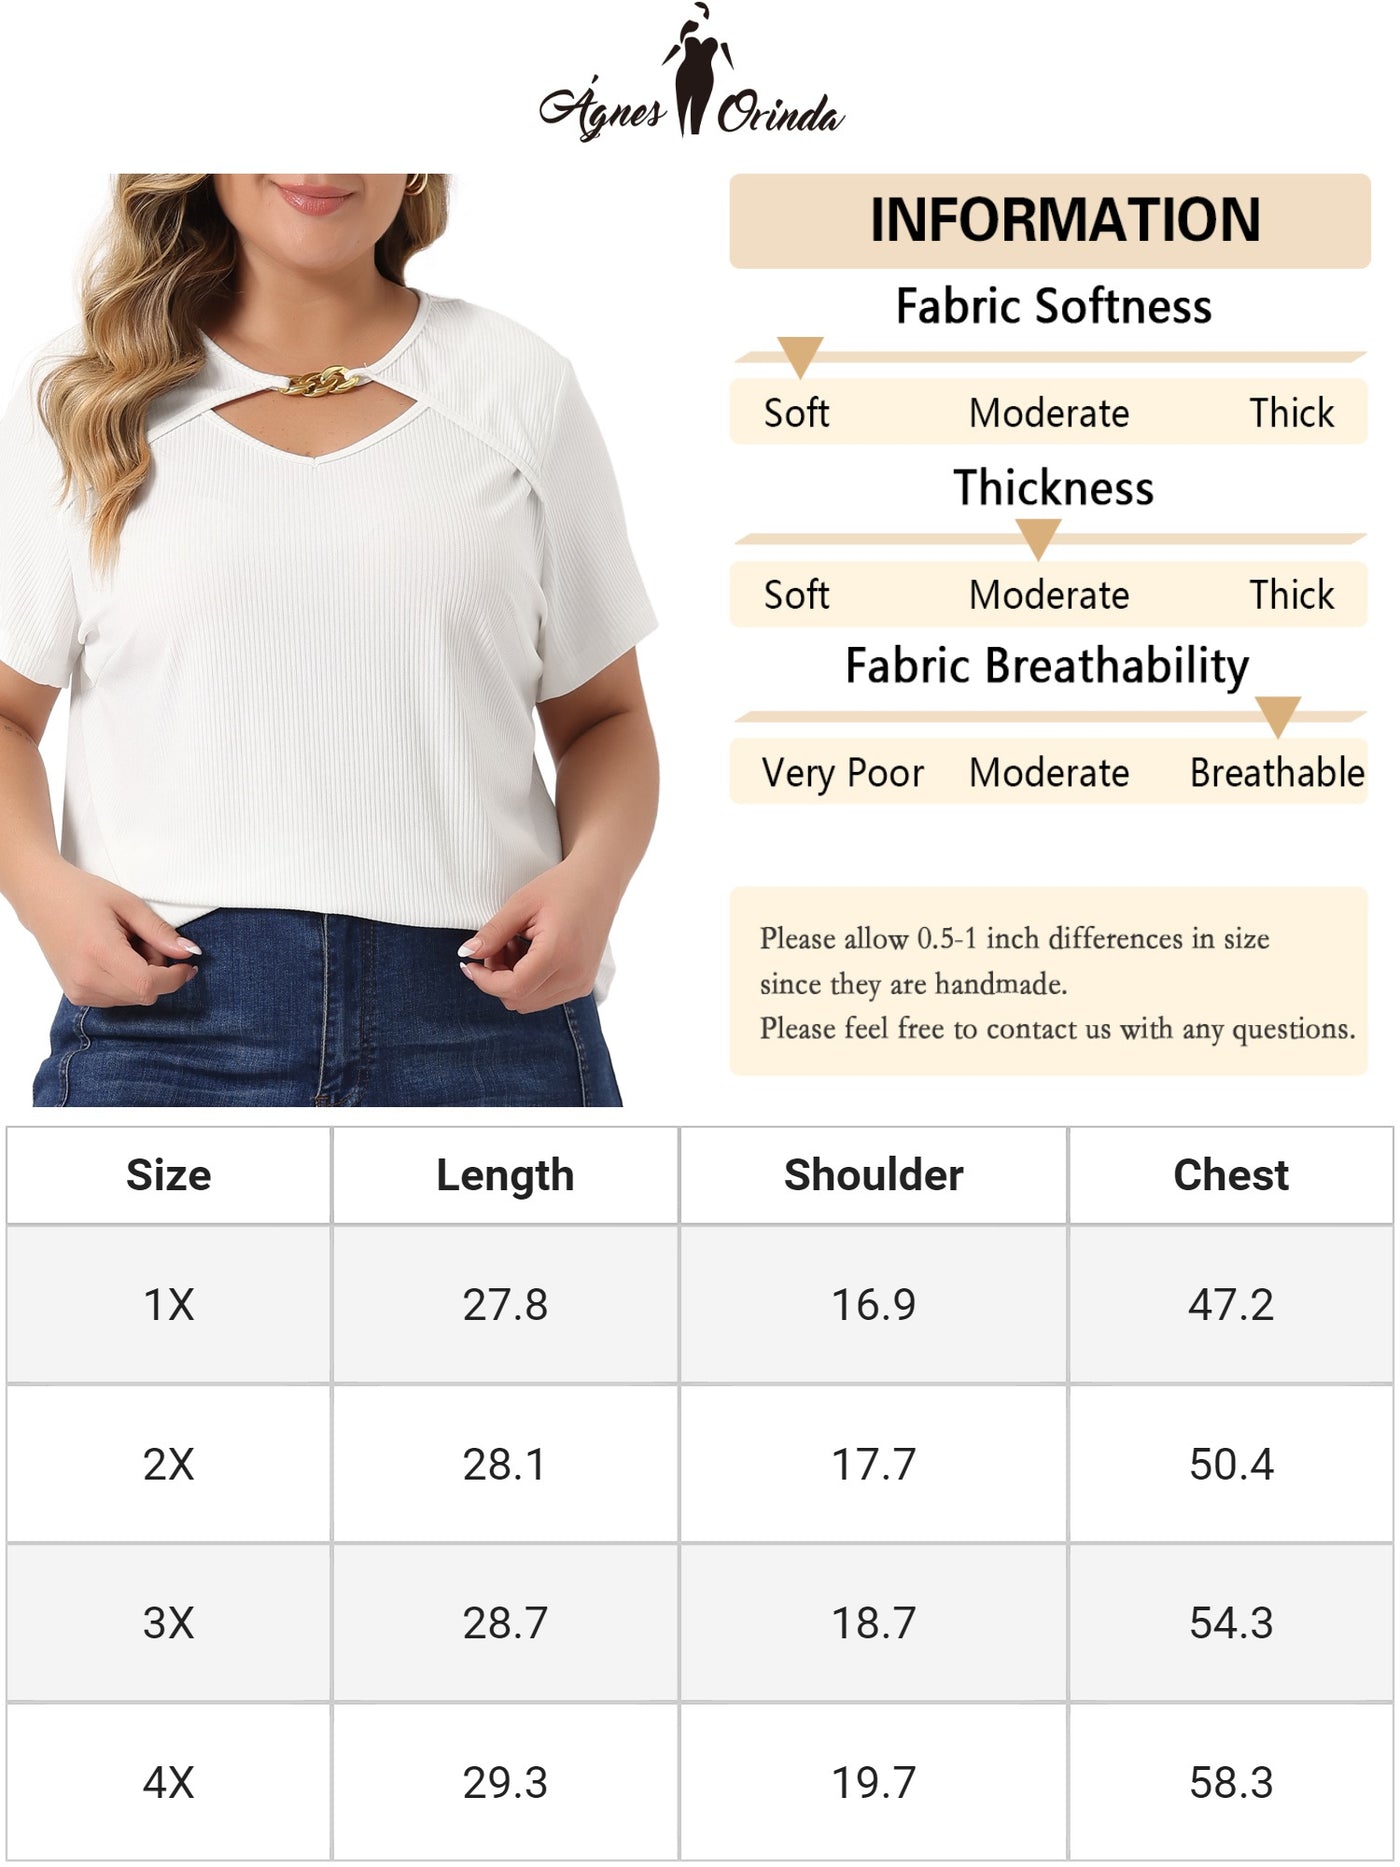 Bublédon Plus Size Top for Women Basic Short Sleeve Metal Chain Crop Tops Cutout Front Bodycon T-Shirts